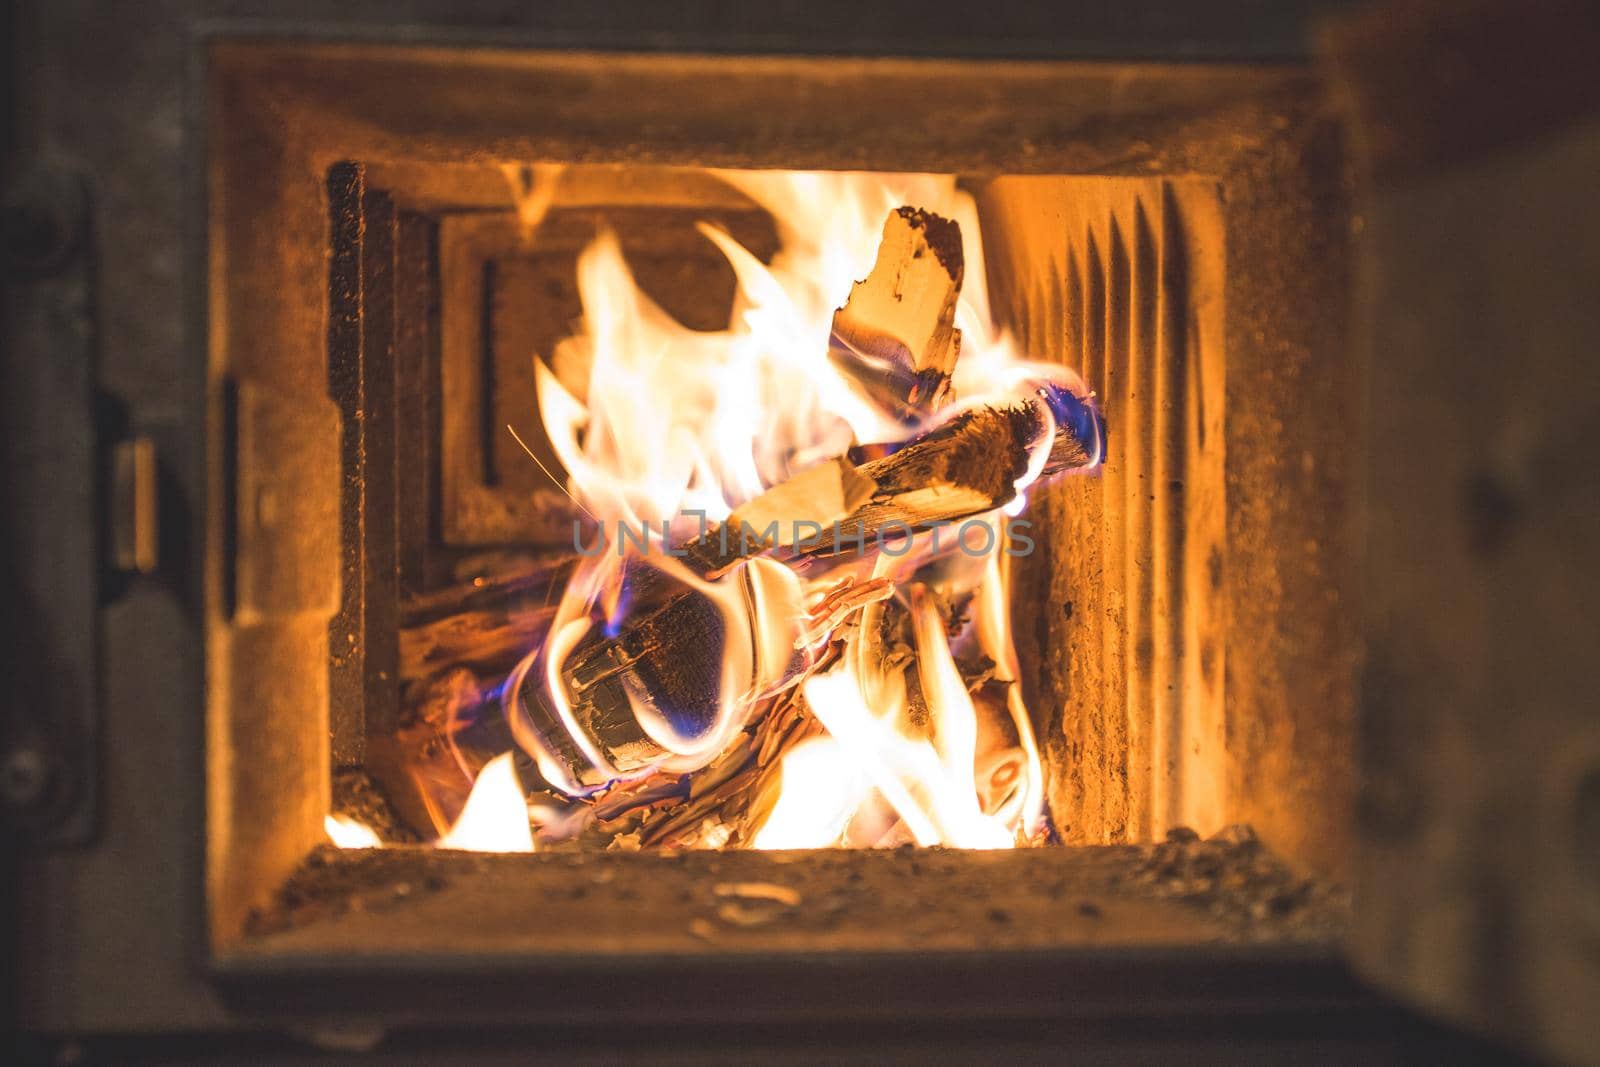 Blaze fire flame in stove, orange and black